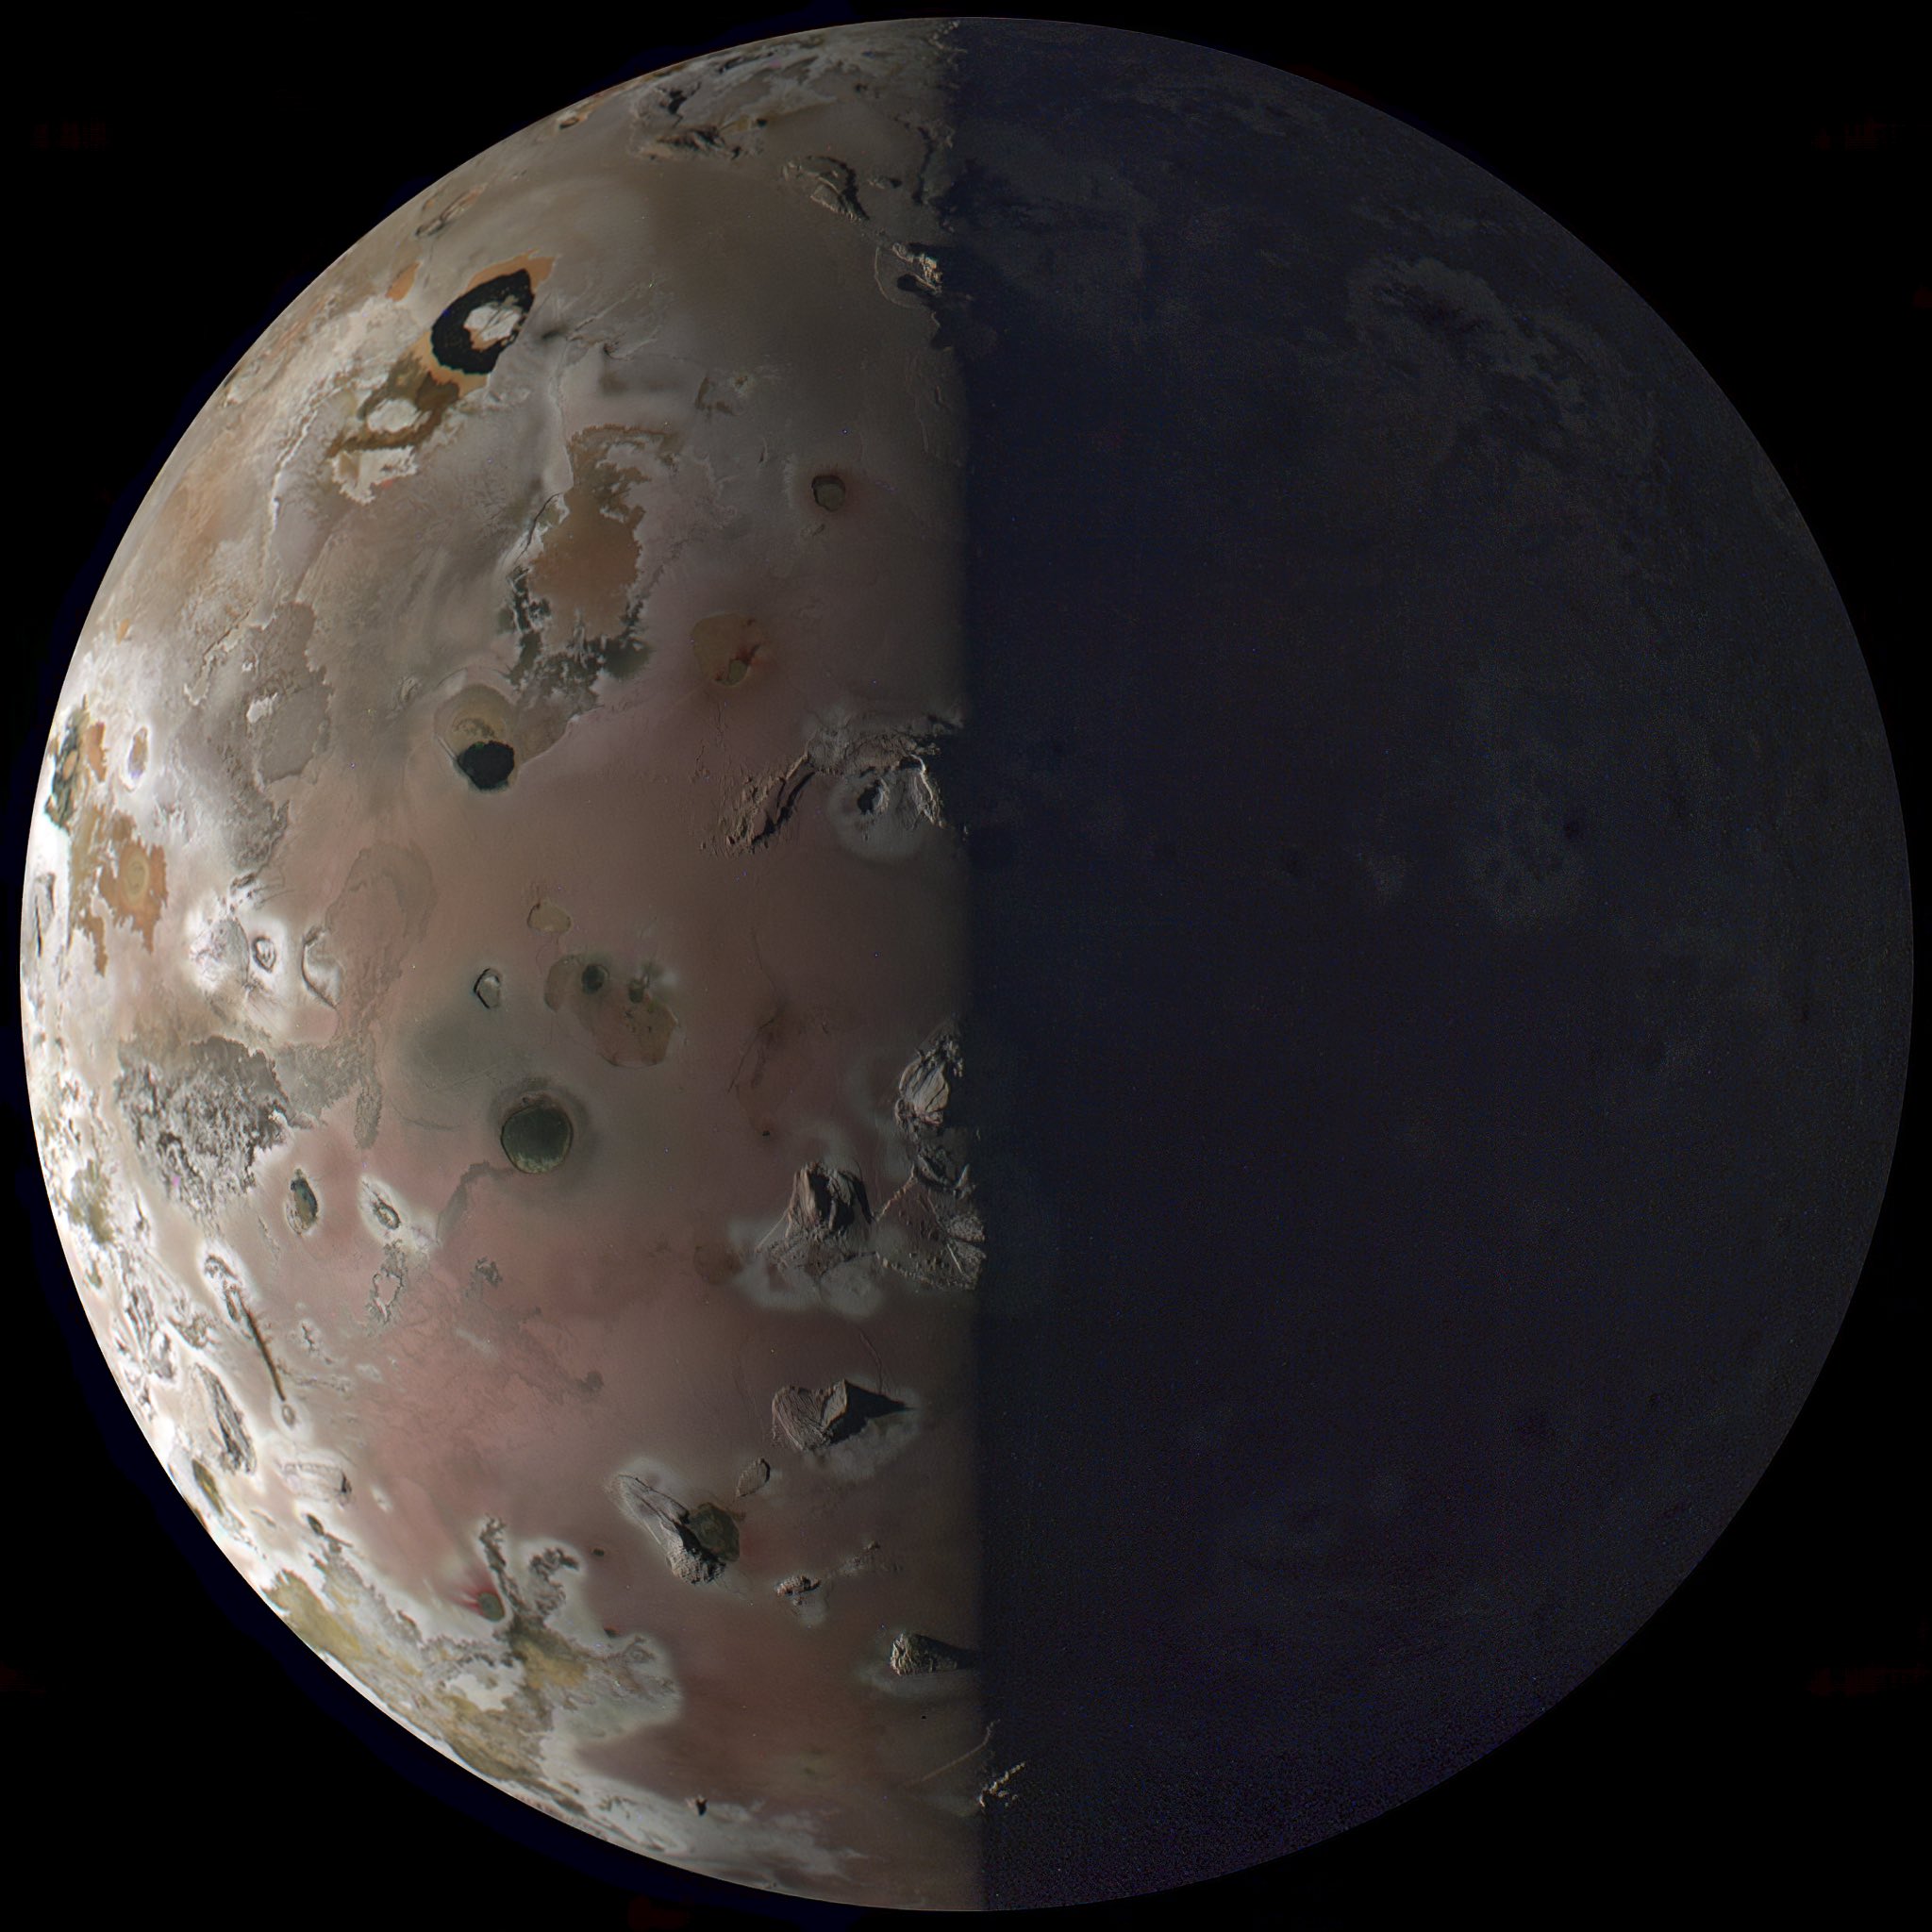 Island in the lava lake: Juno probe revealed the secrets of Io